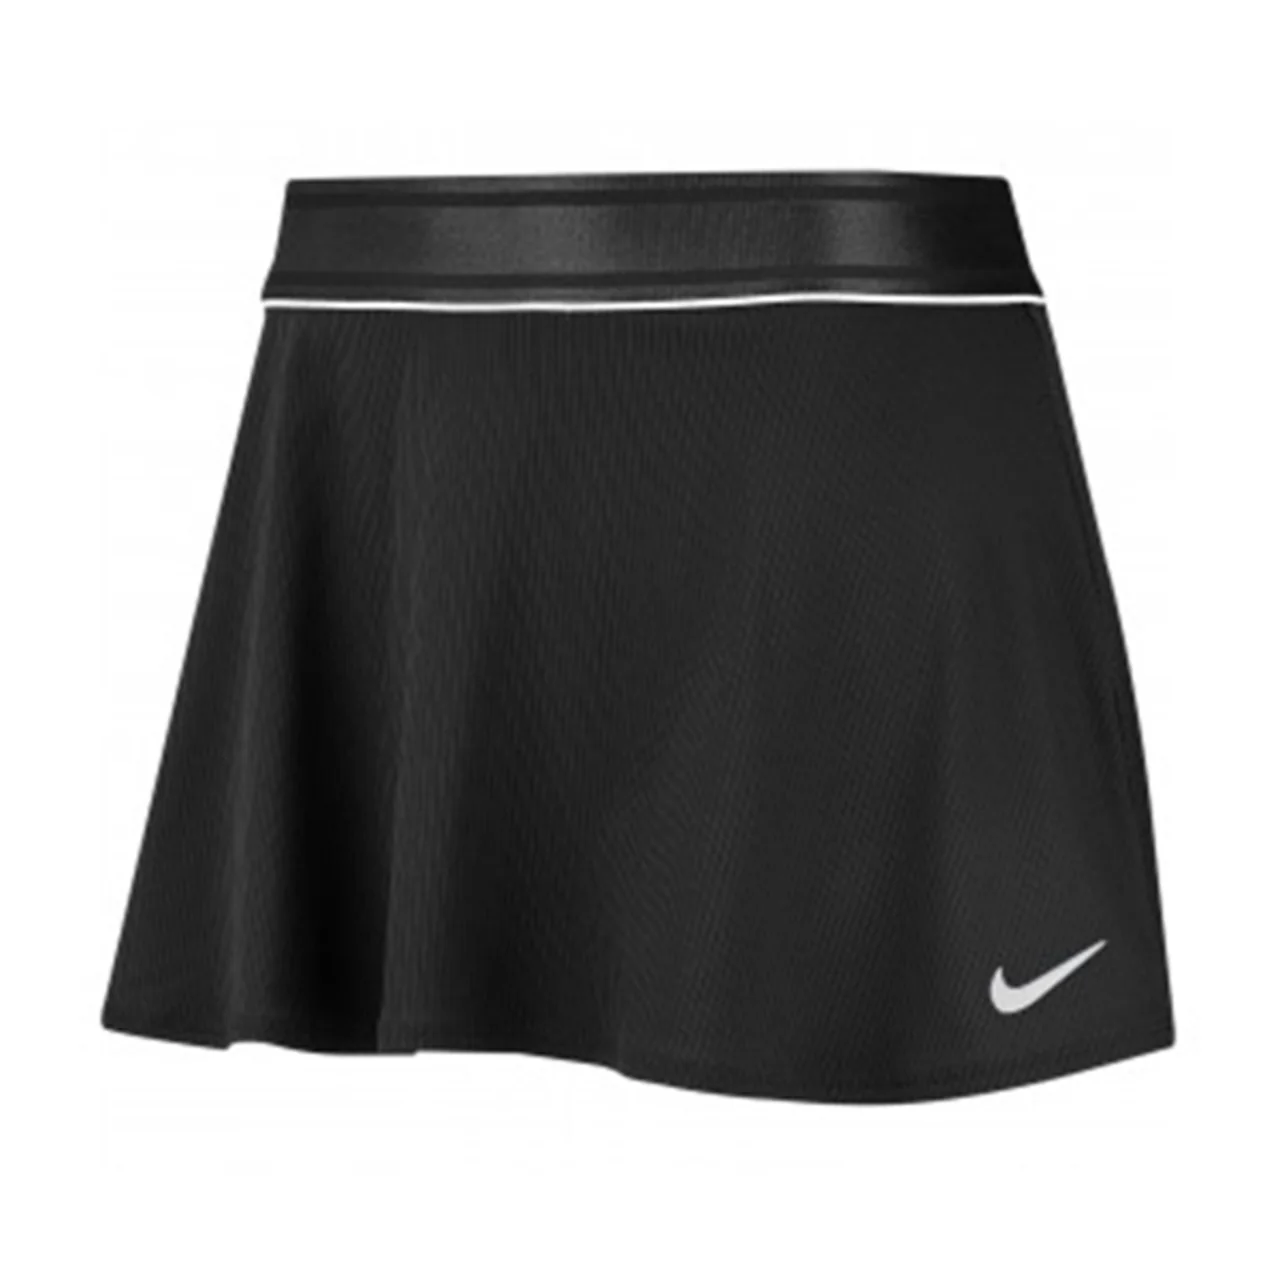 Nike Flouncy Skirt Black